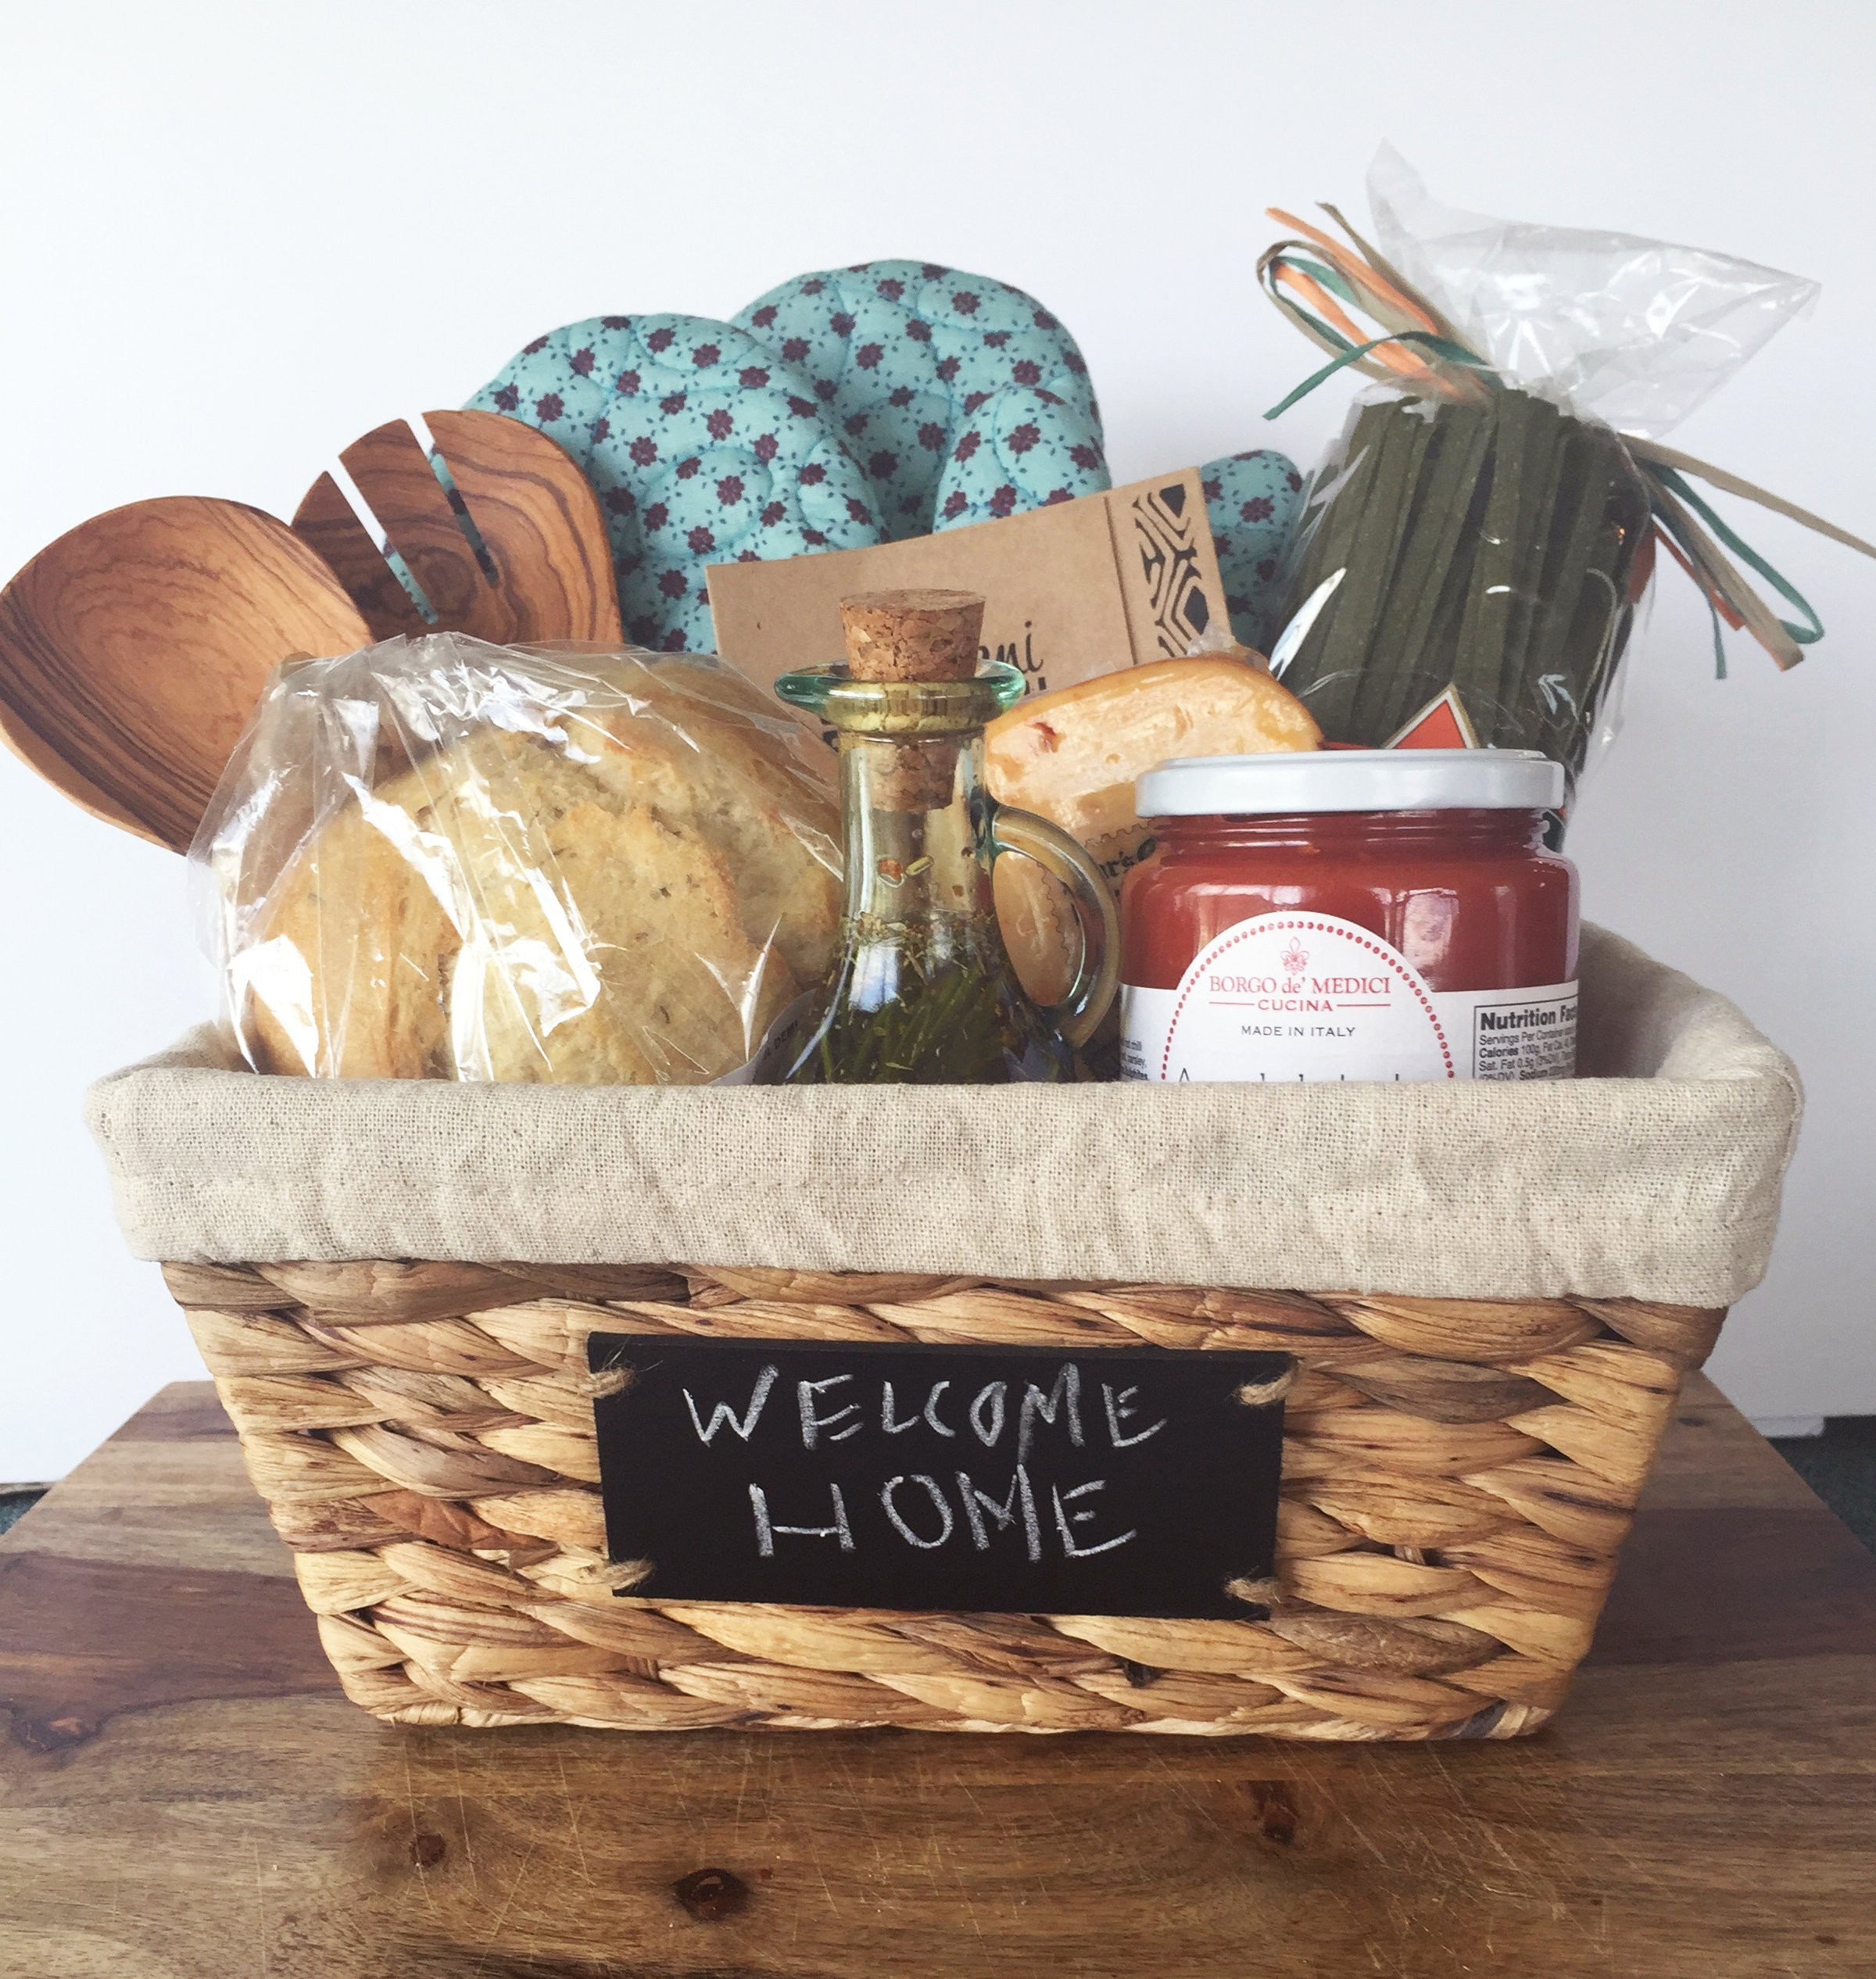 New Homeowner Gift Basket Ideas
 DIY HOUSEWARMING GIFT BASKET T A S T Y S O U T H E R N